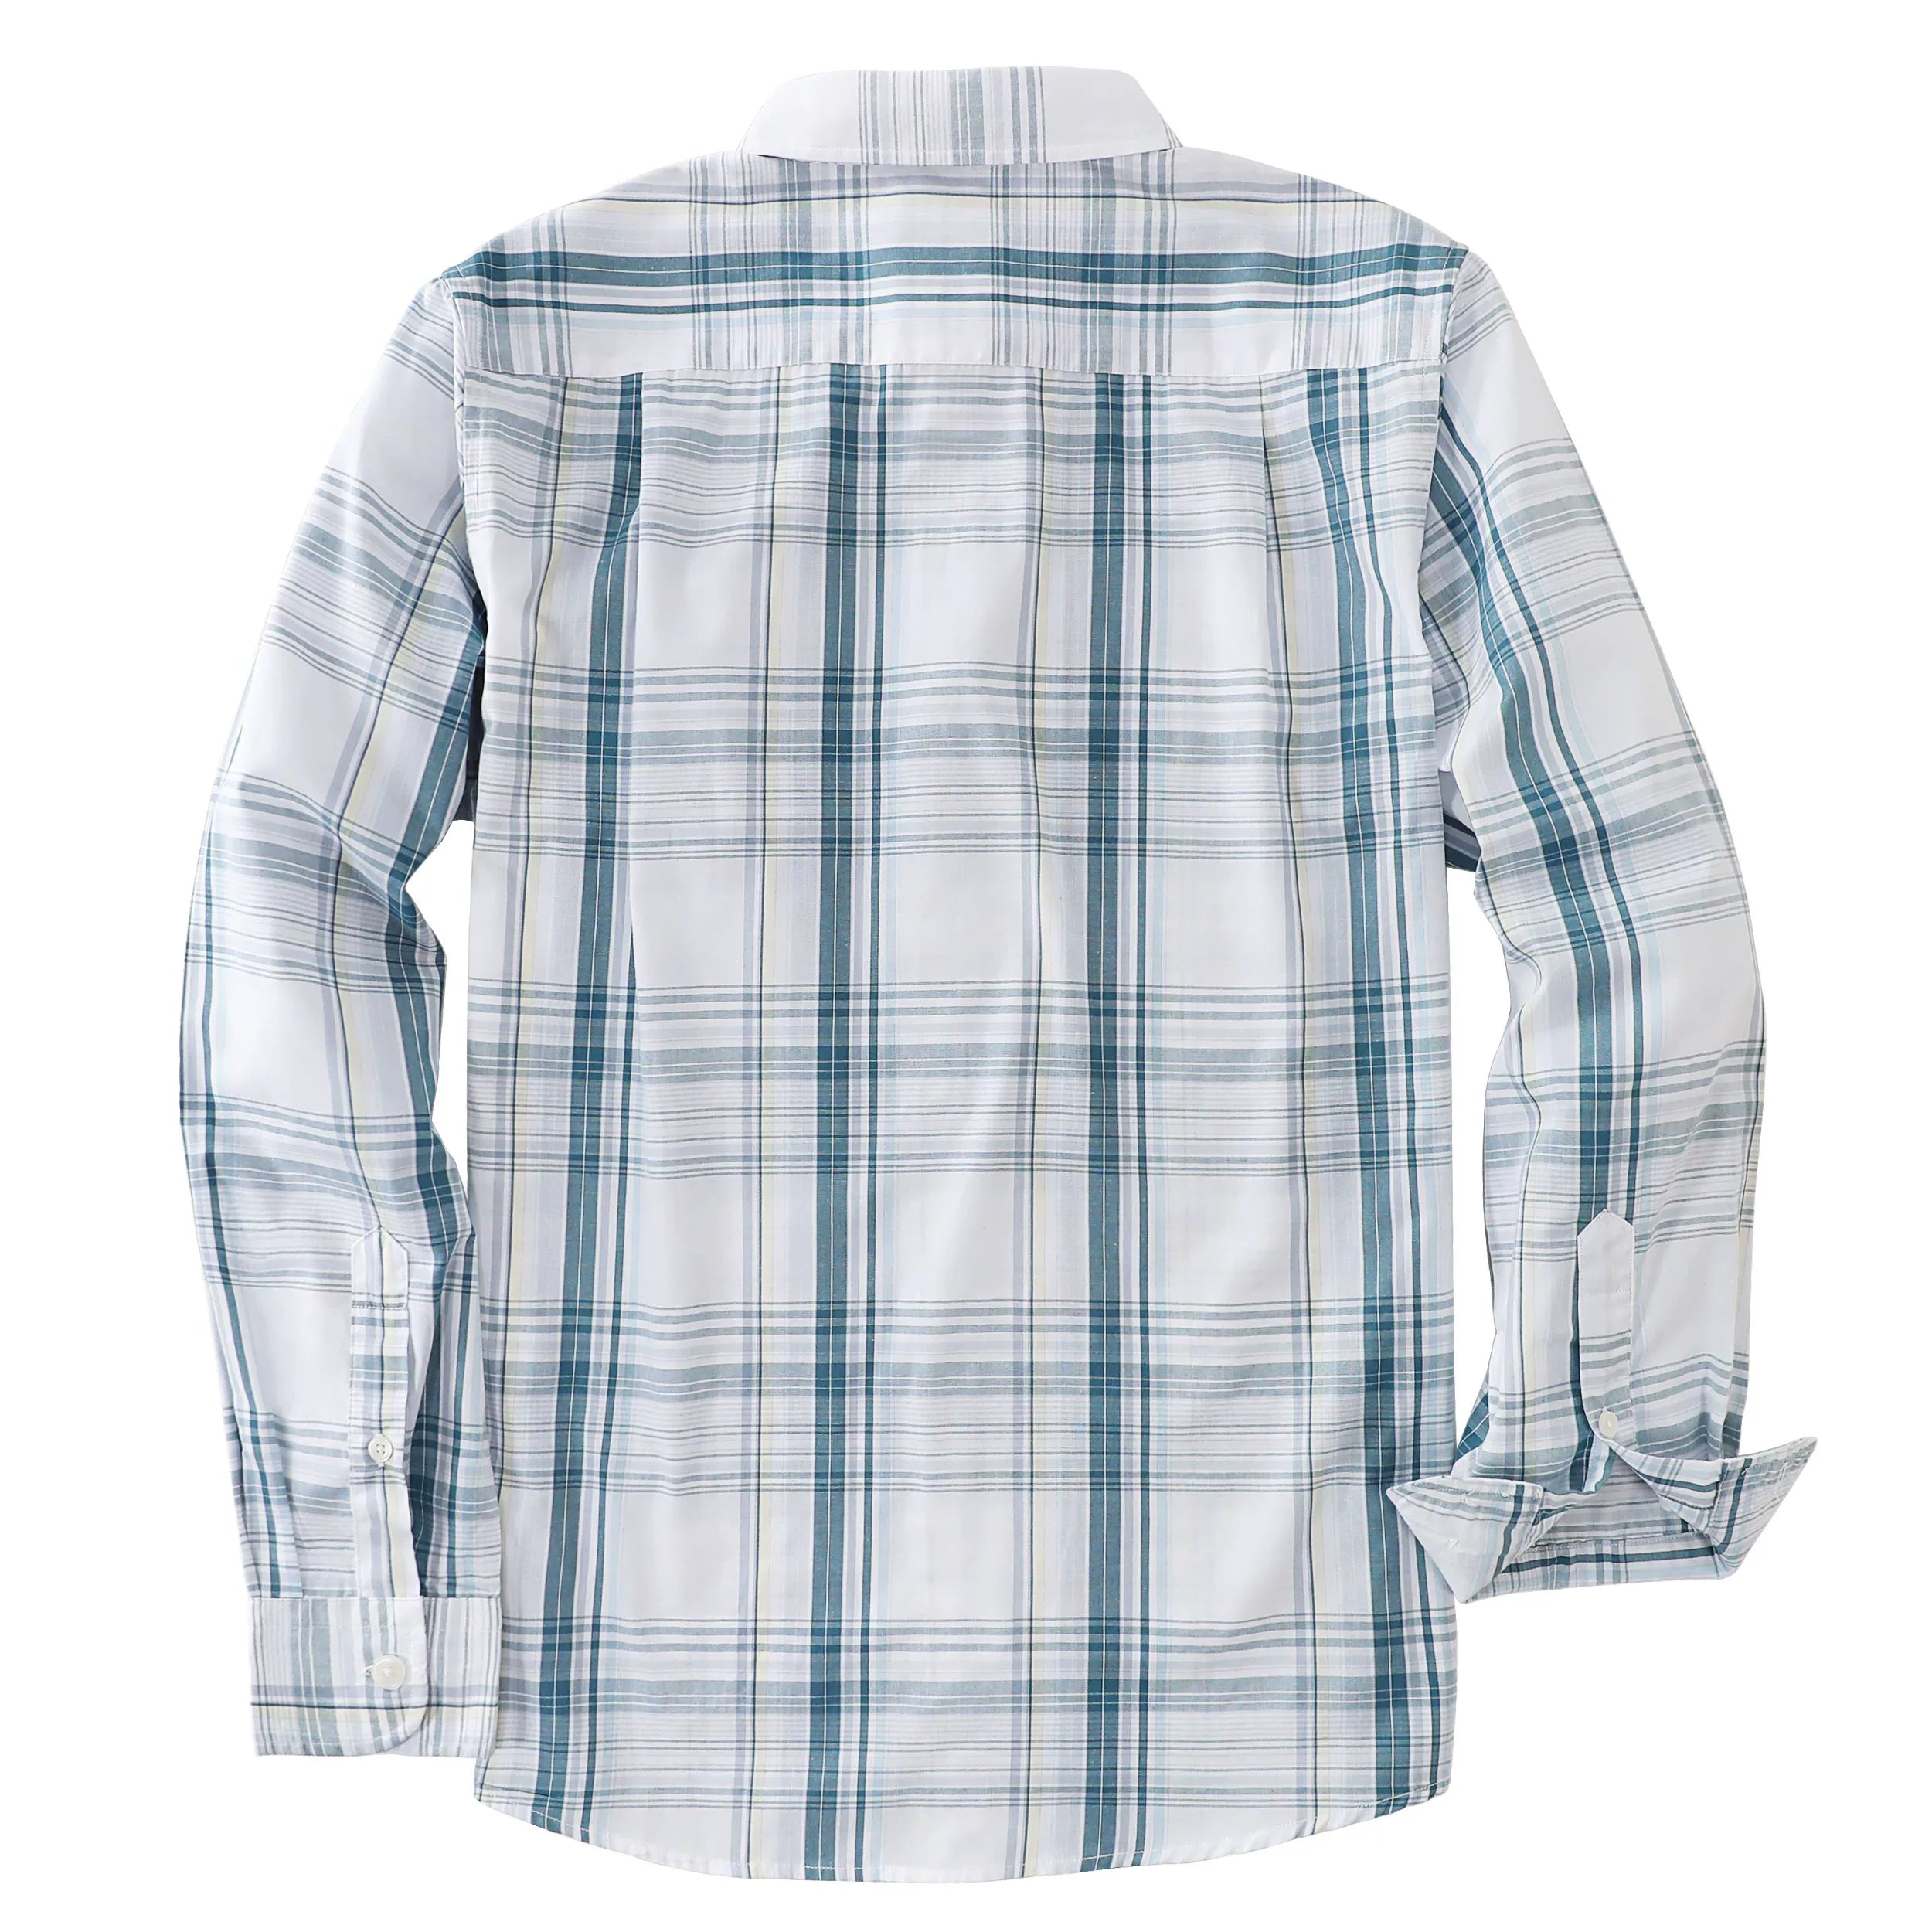 Dubinik®Mens Shirts Long Sleeve Shirts For Men Casual Button Down Vintage Plaid Pocket Soft Mens Button Up Shirts Long Sleeve#52016